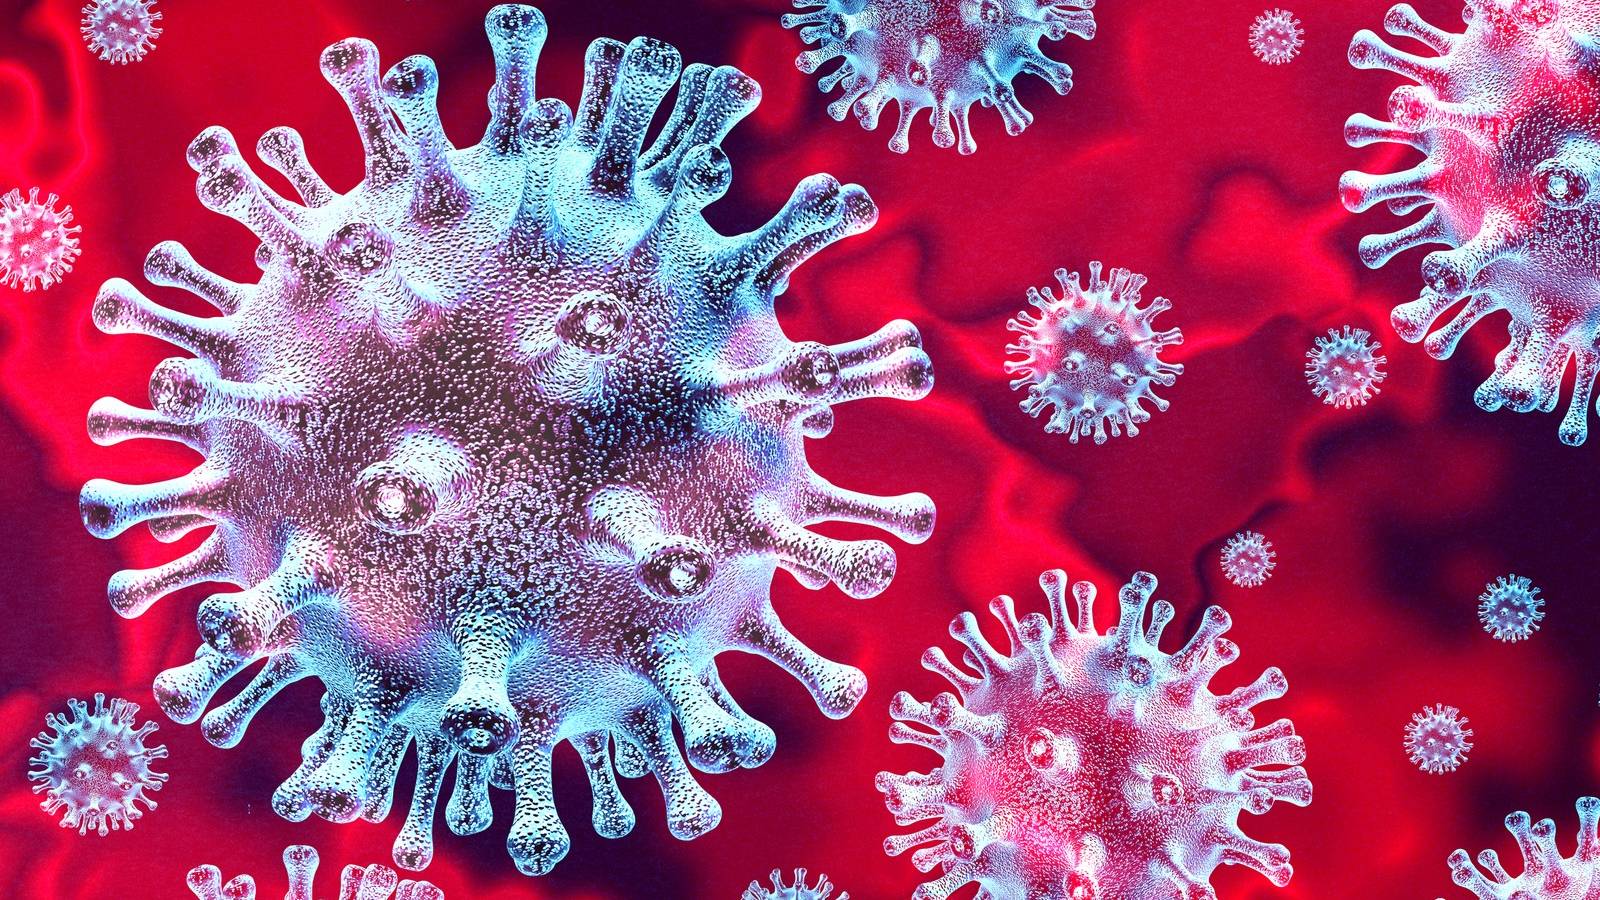 Coronavirus-vaccinedosis 3 officielt anbefalet i Europa